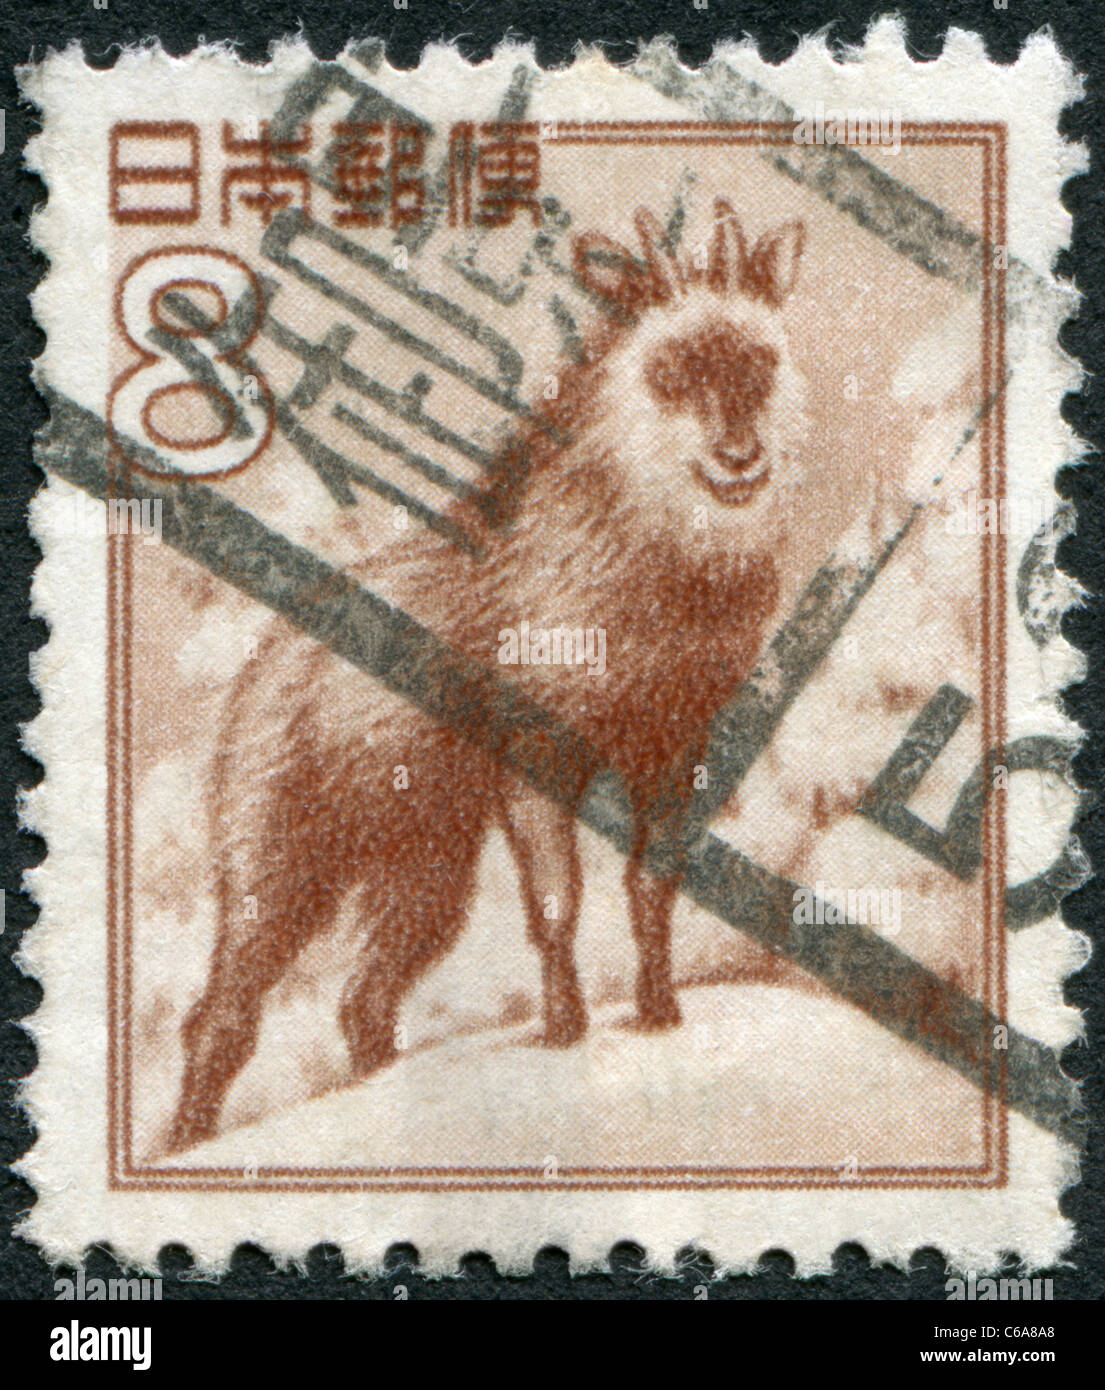 JAPAN - 1952: A stamp printed in Japan, depicts Japanese serow (Capricornis crispus) Stock Photo